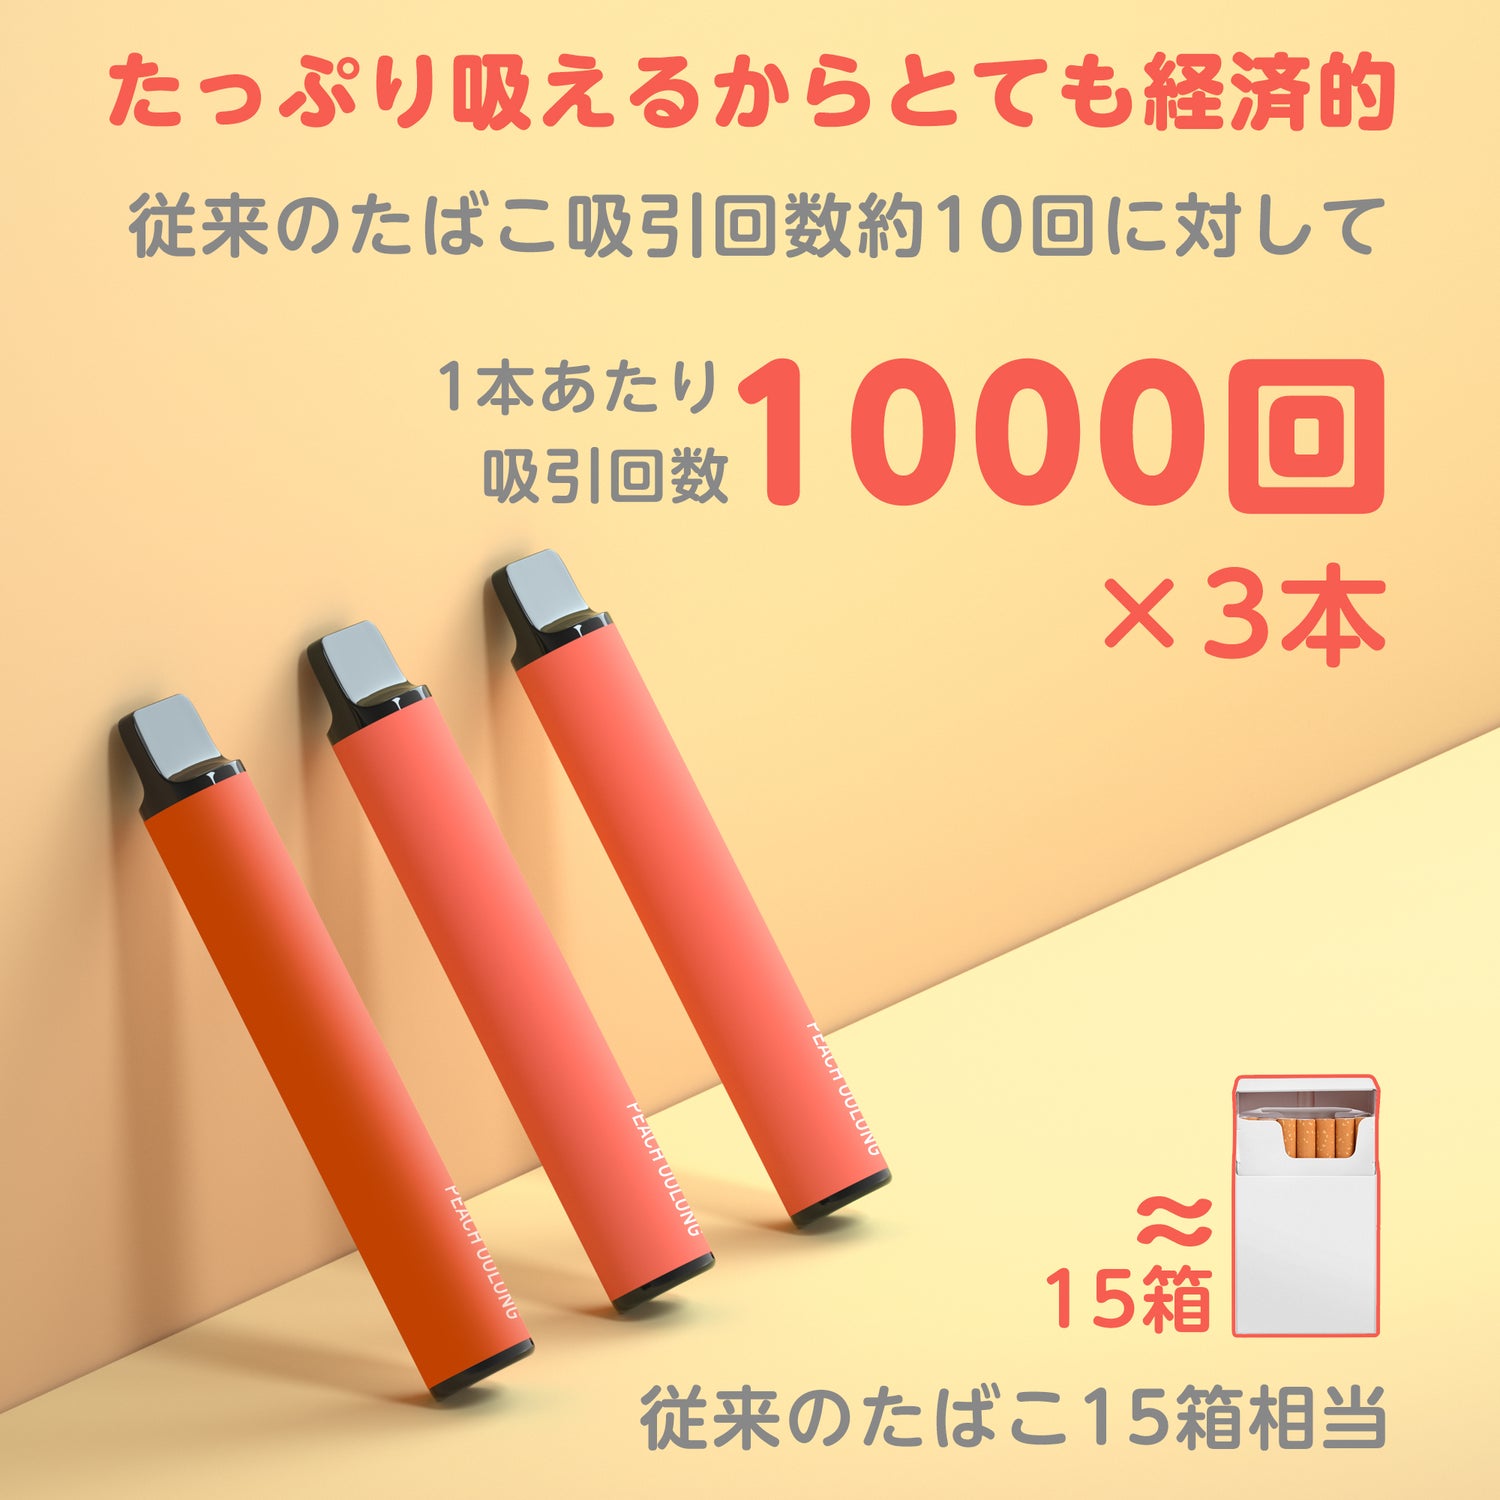 KINOE electronic cigarette disposable 3-piece set (white peach oolong tea)